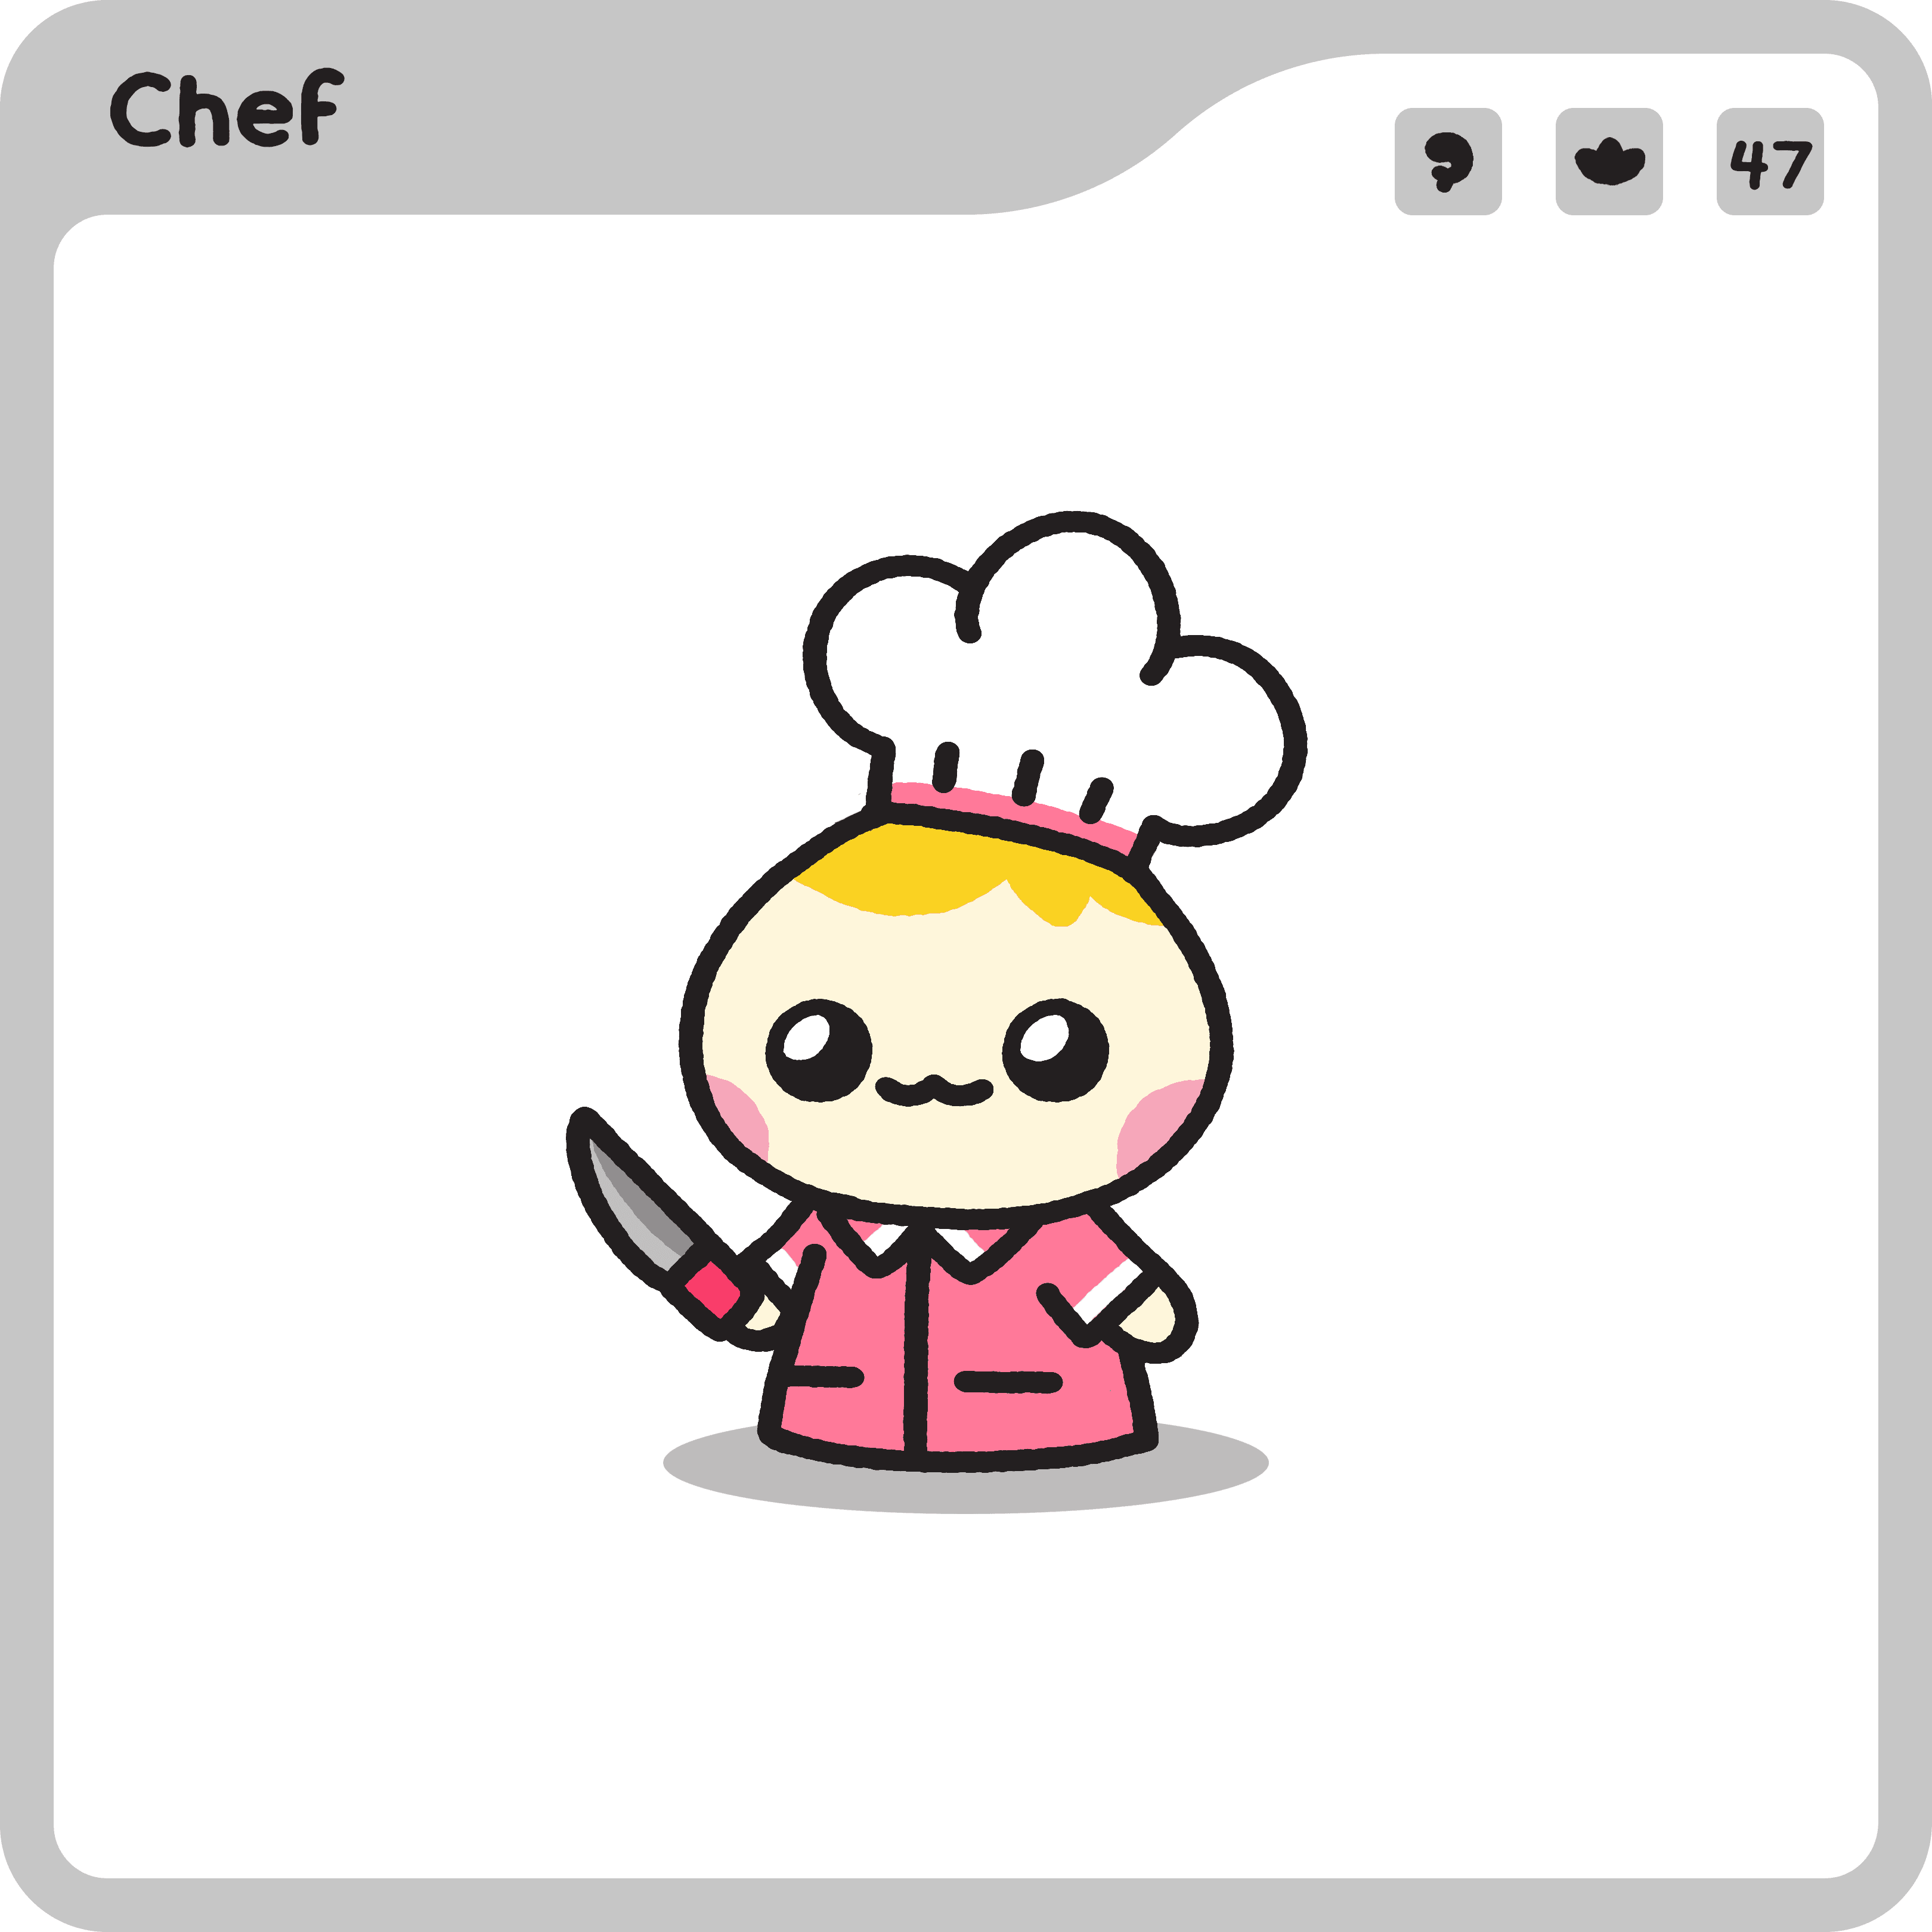 Chef Sage #47